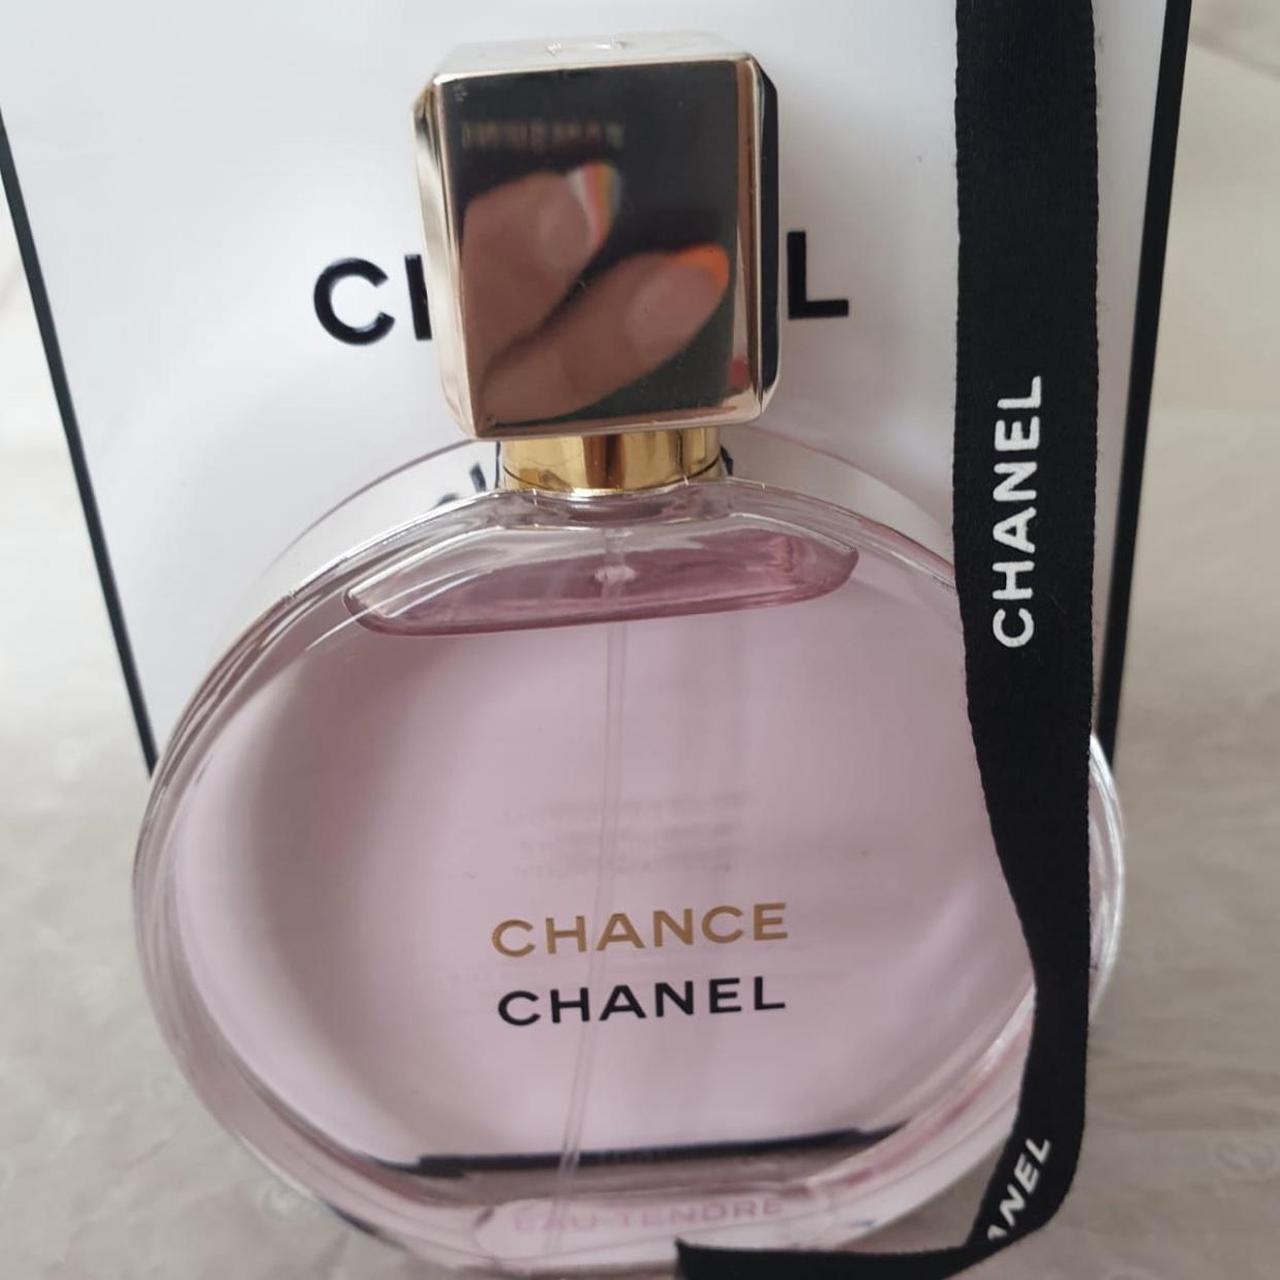 Chanel chance perfume 100ml, #chanelchance #chanel